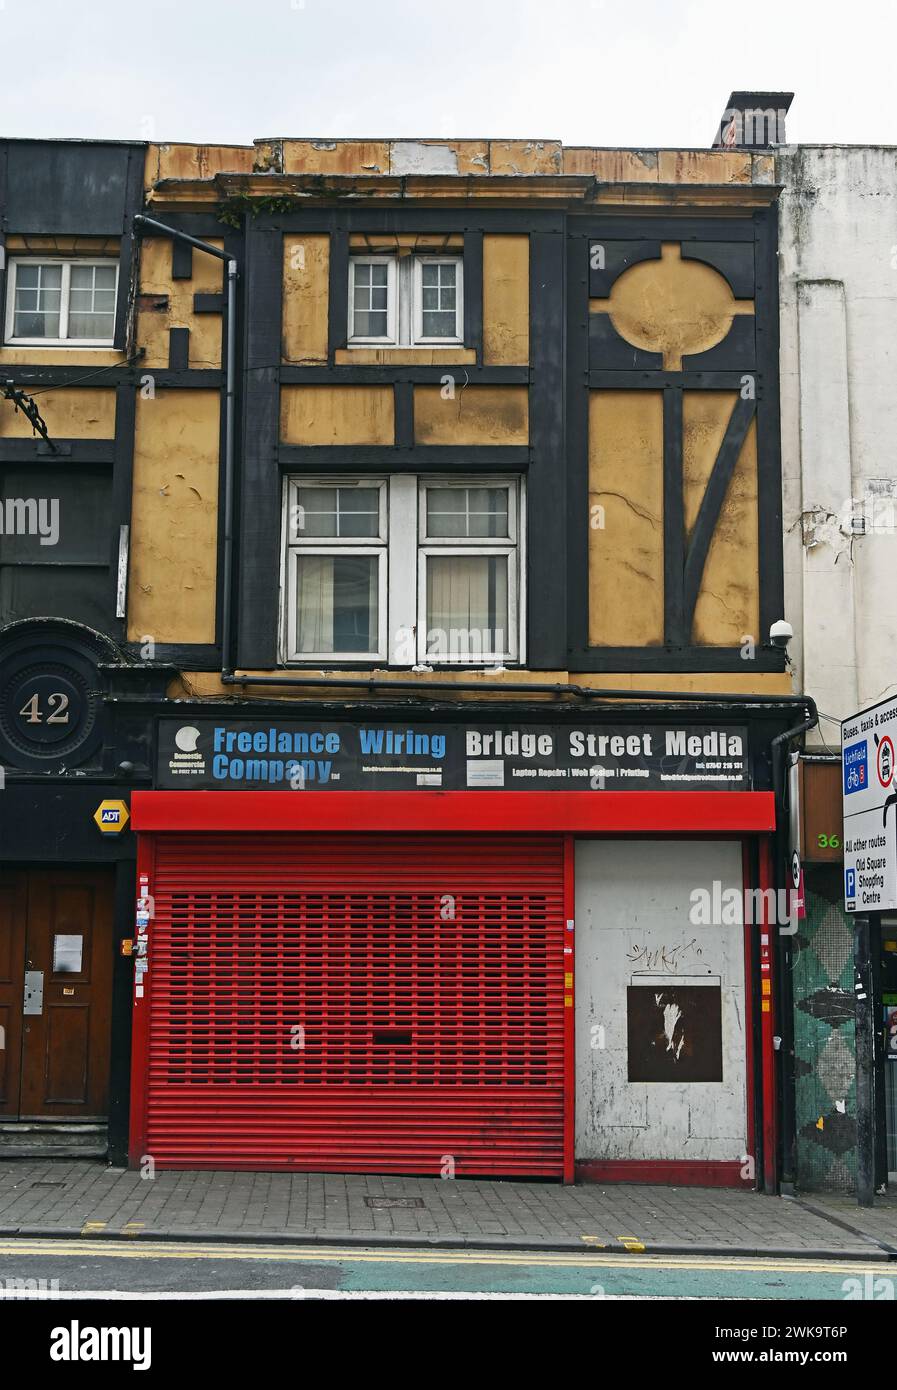 Freelance Wiring Company and Bridge Street Media. Bridge Street, Walsall, West Midlands, England, United Kingdom, Europe. Stock Photo